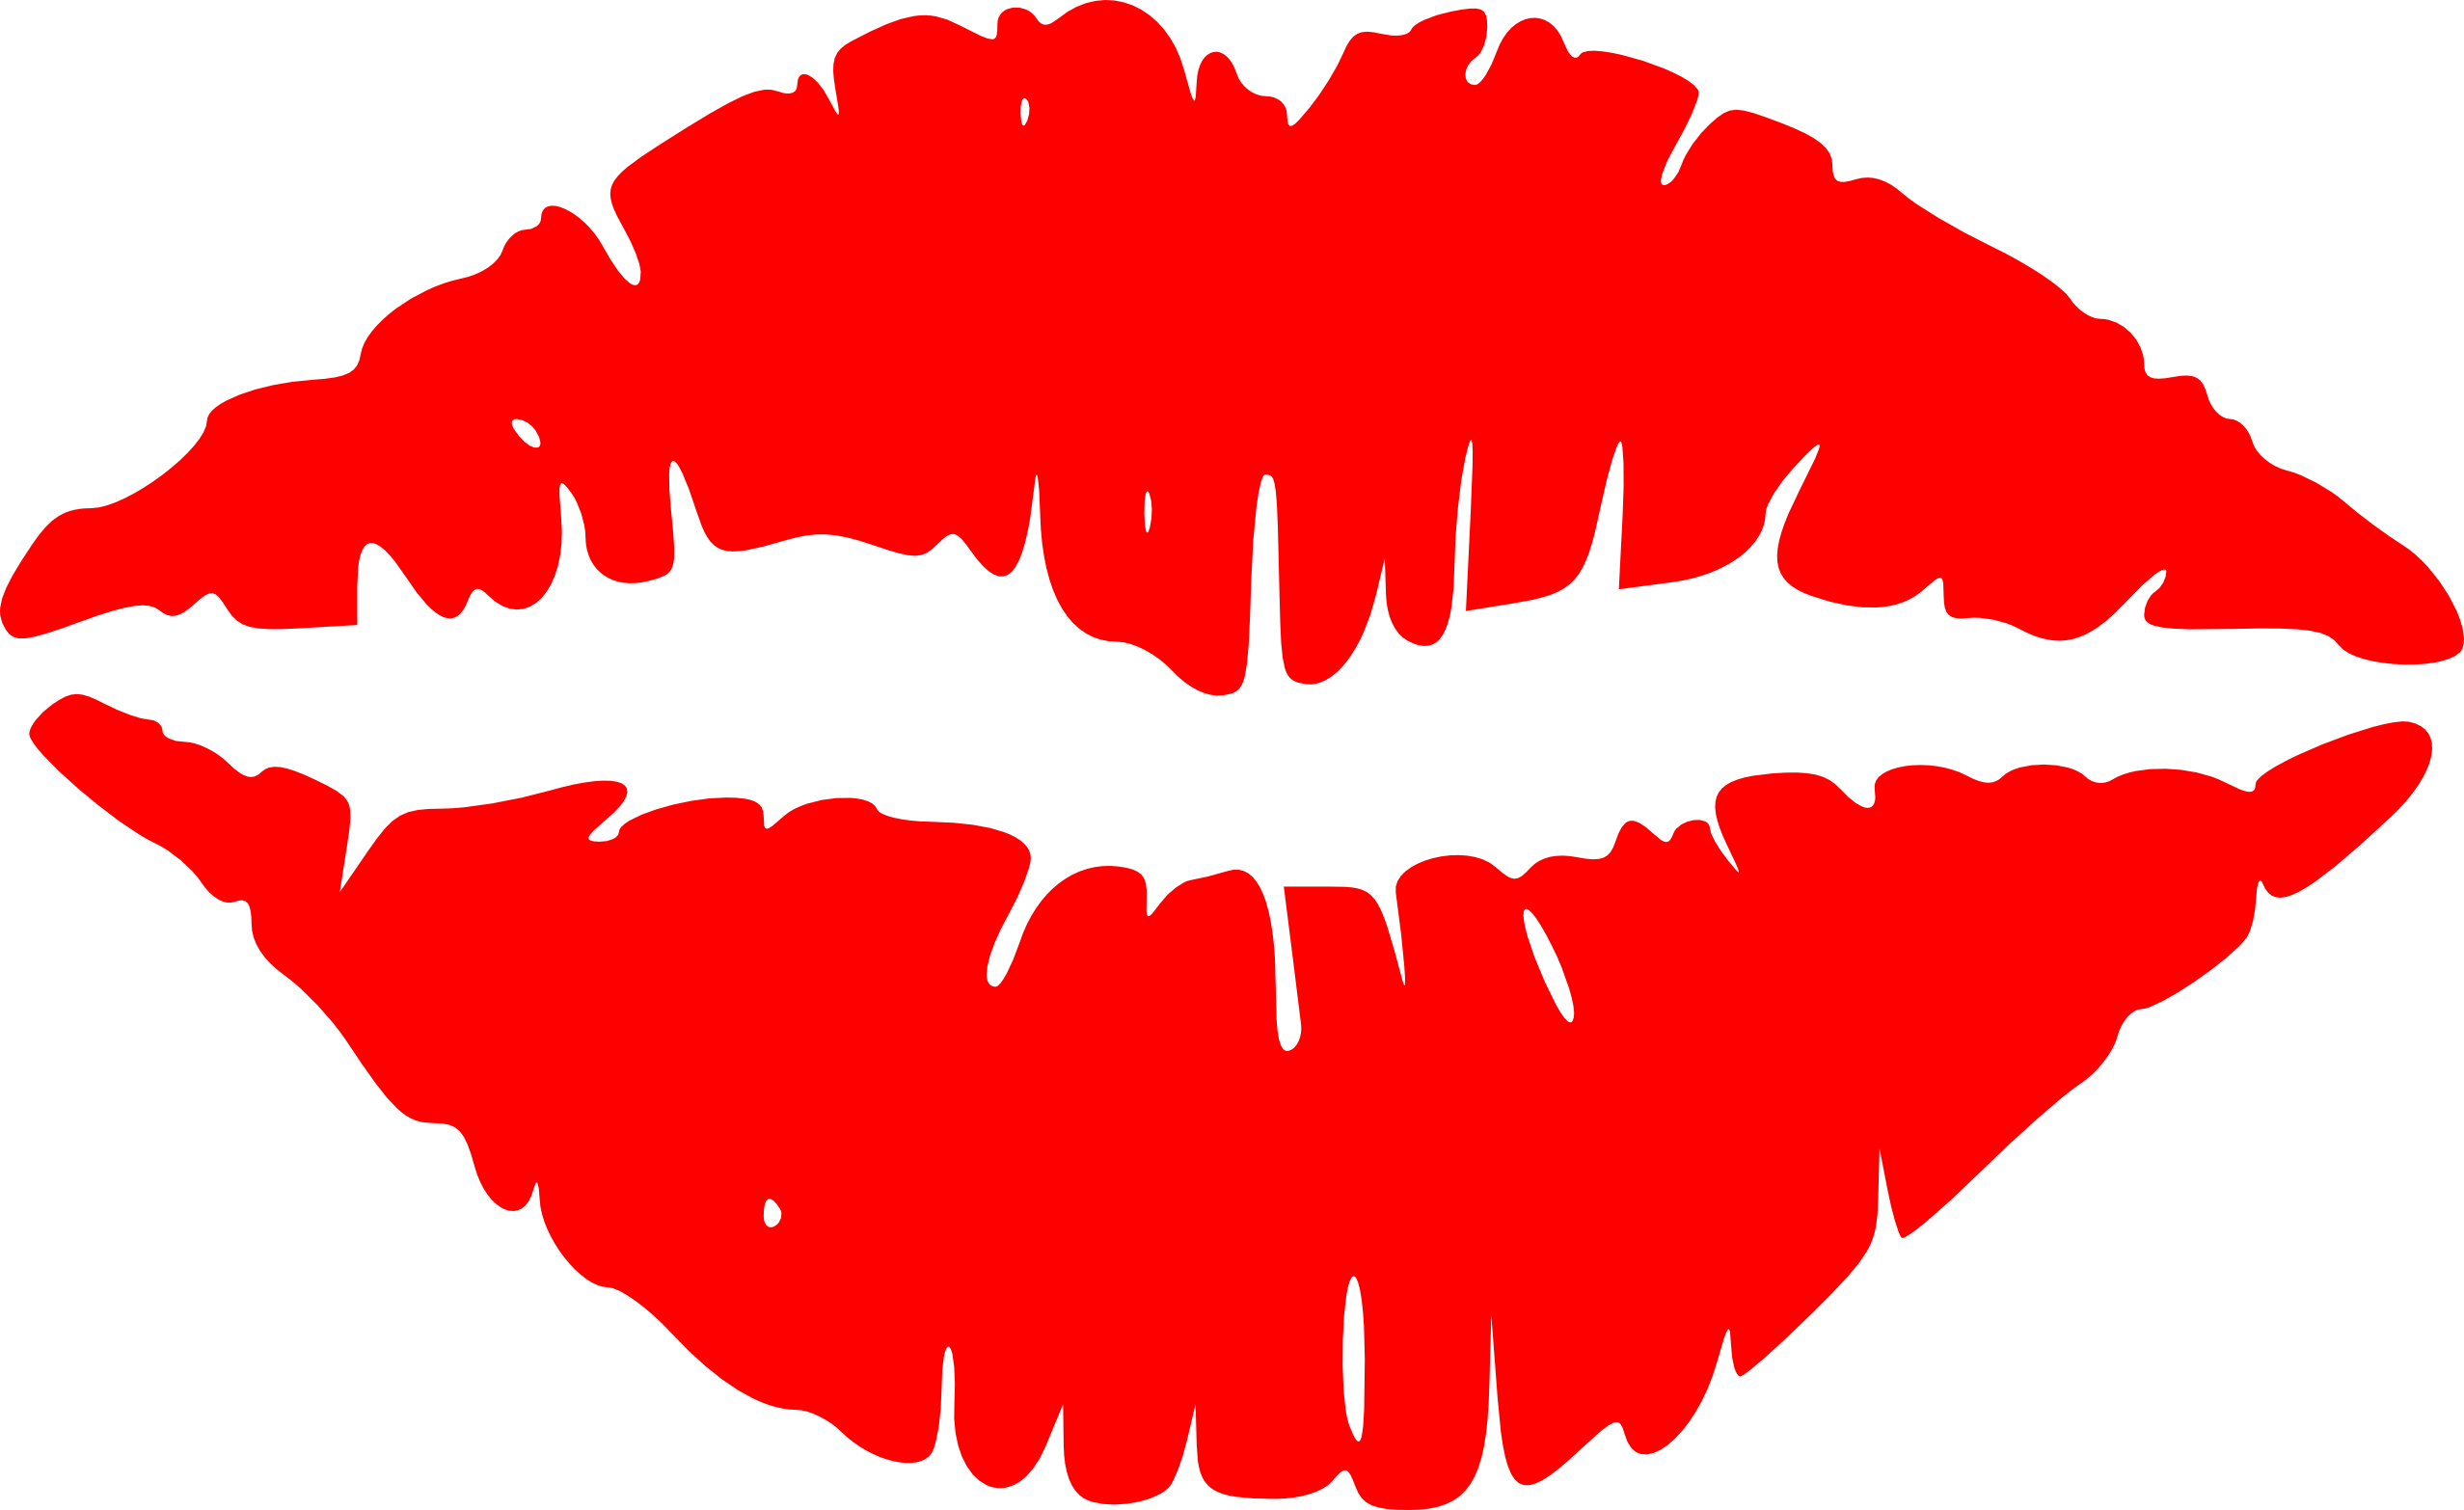 Kiss lips image clip art color sheet